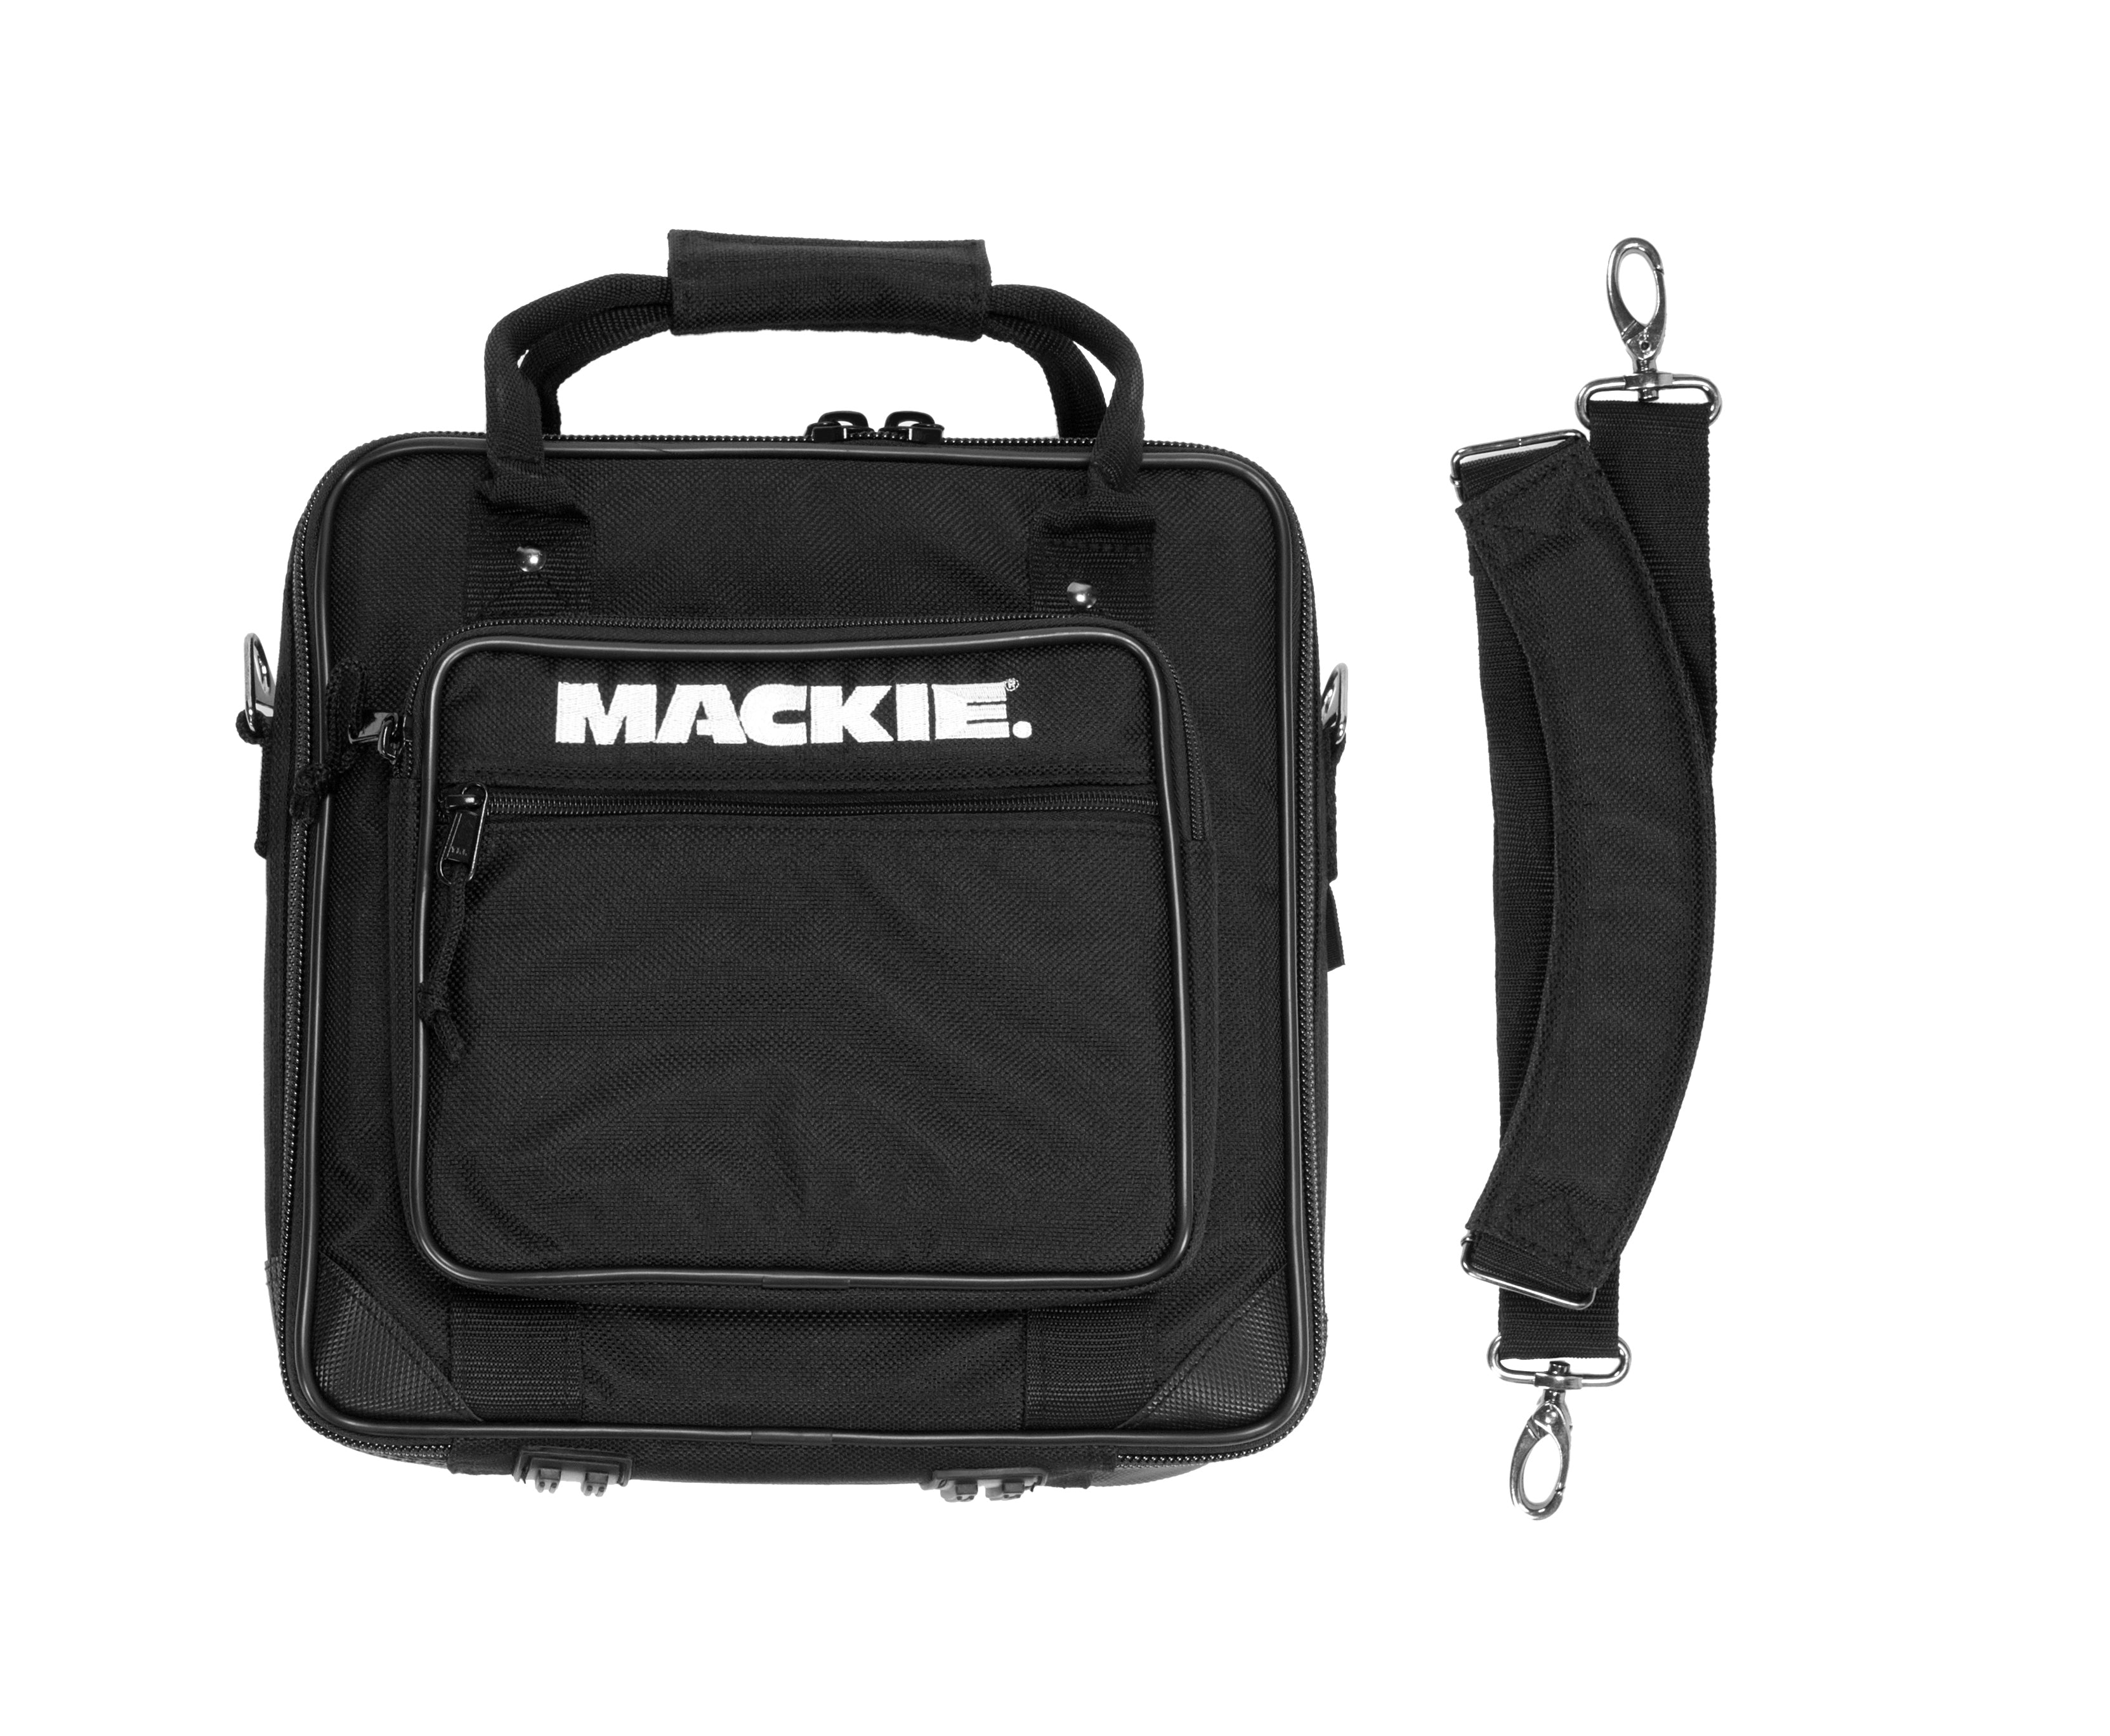 Mackie 1402-VLZ Bag